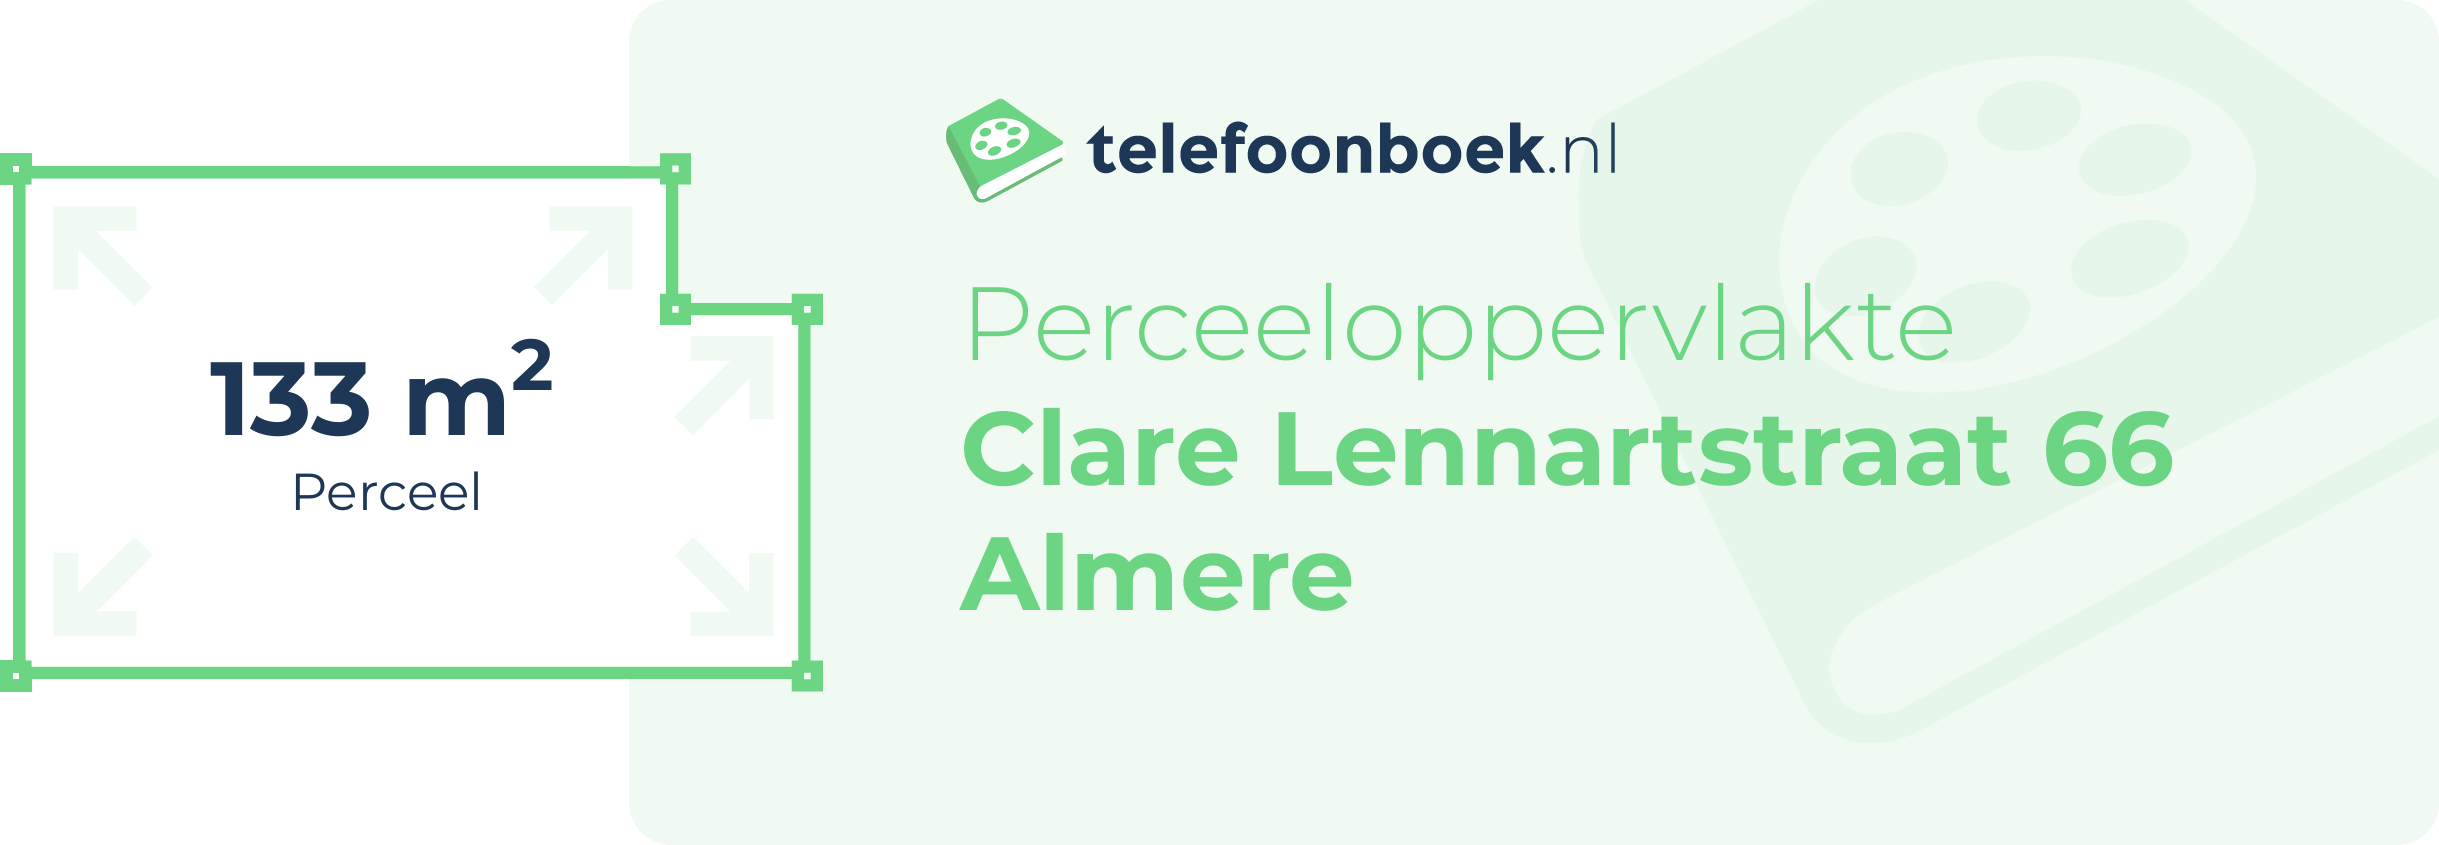 Perceeloppervlakte Clare Lennartstraat 66 Almere